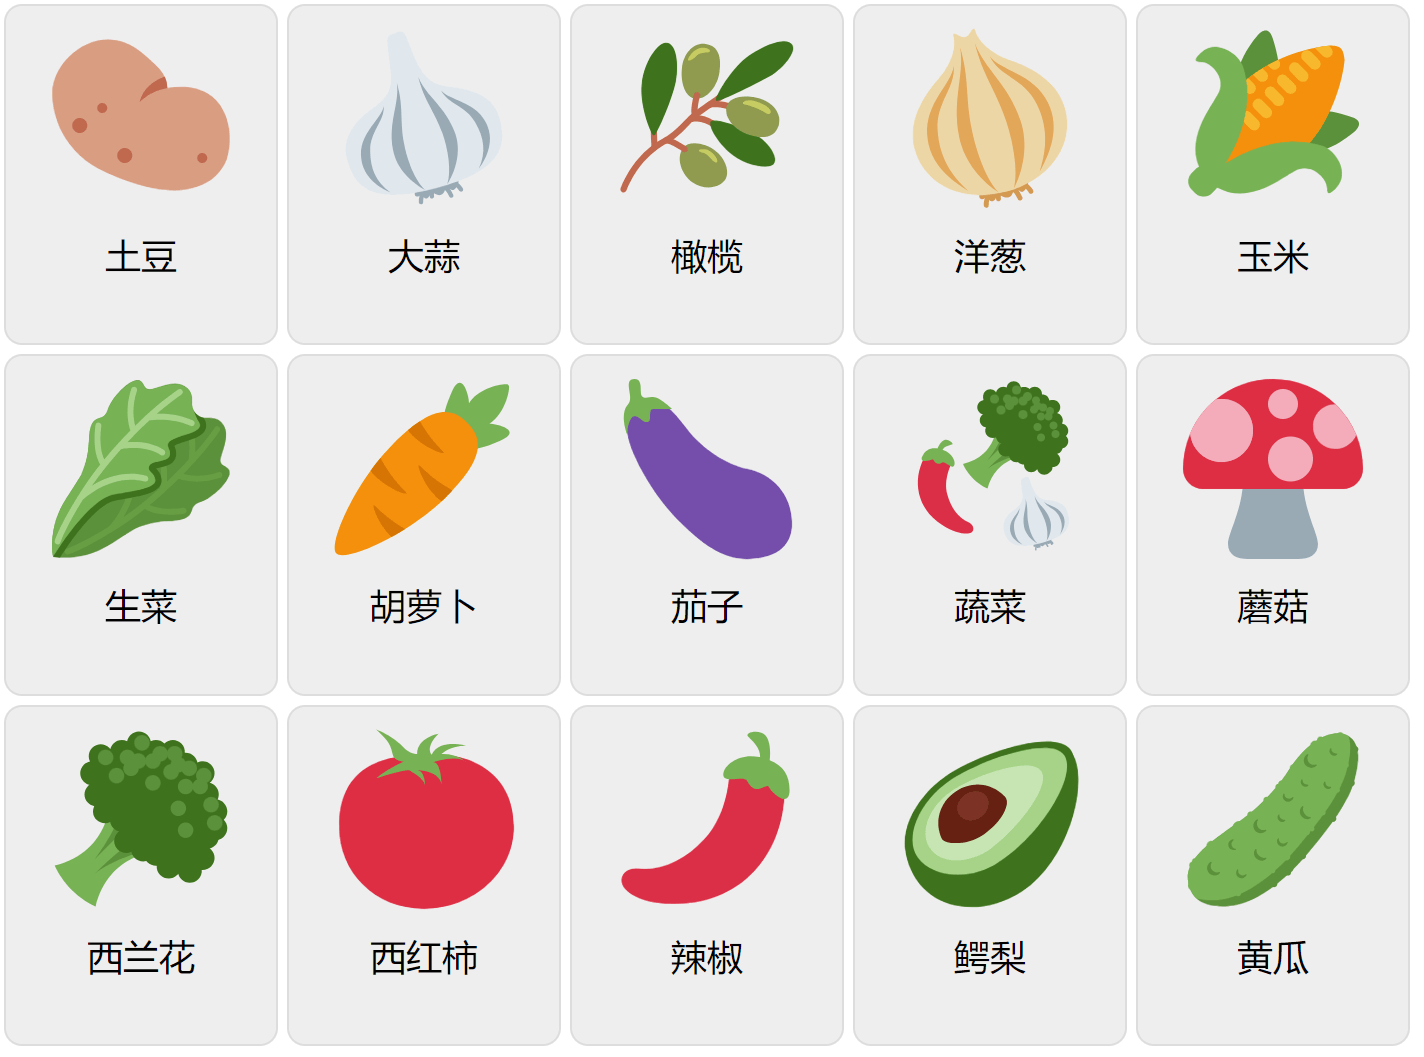 Vegetables in Mandarin Chinese